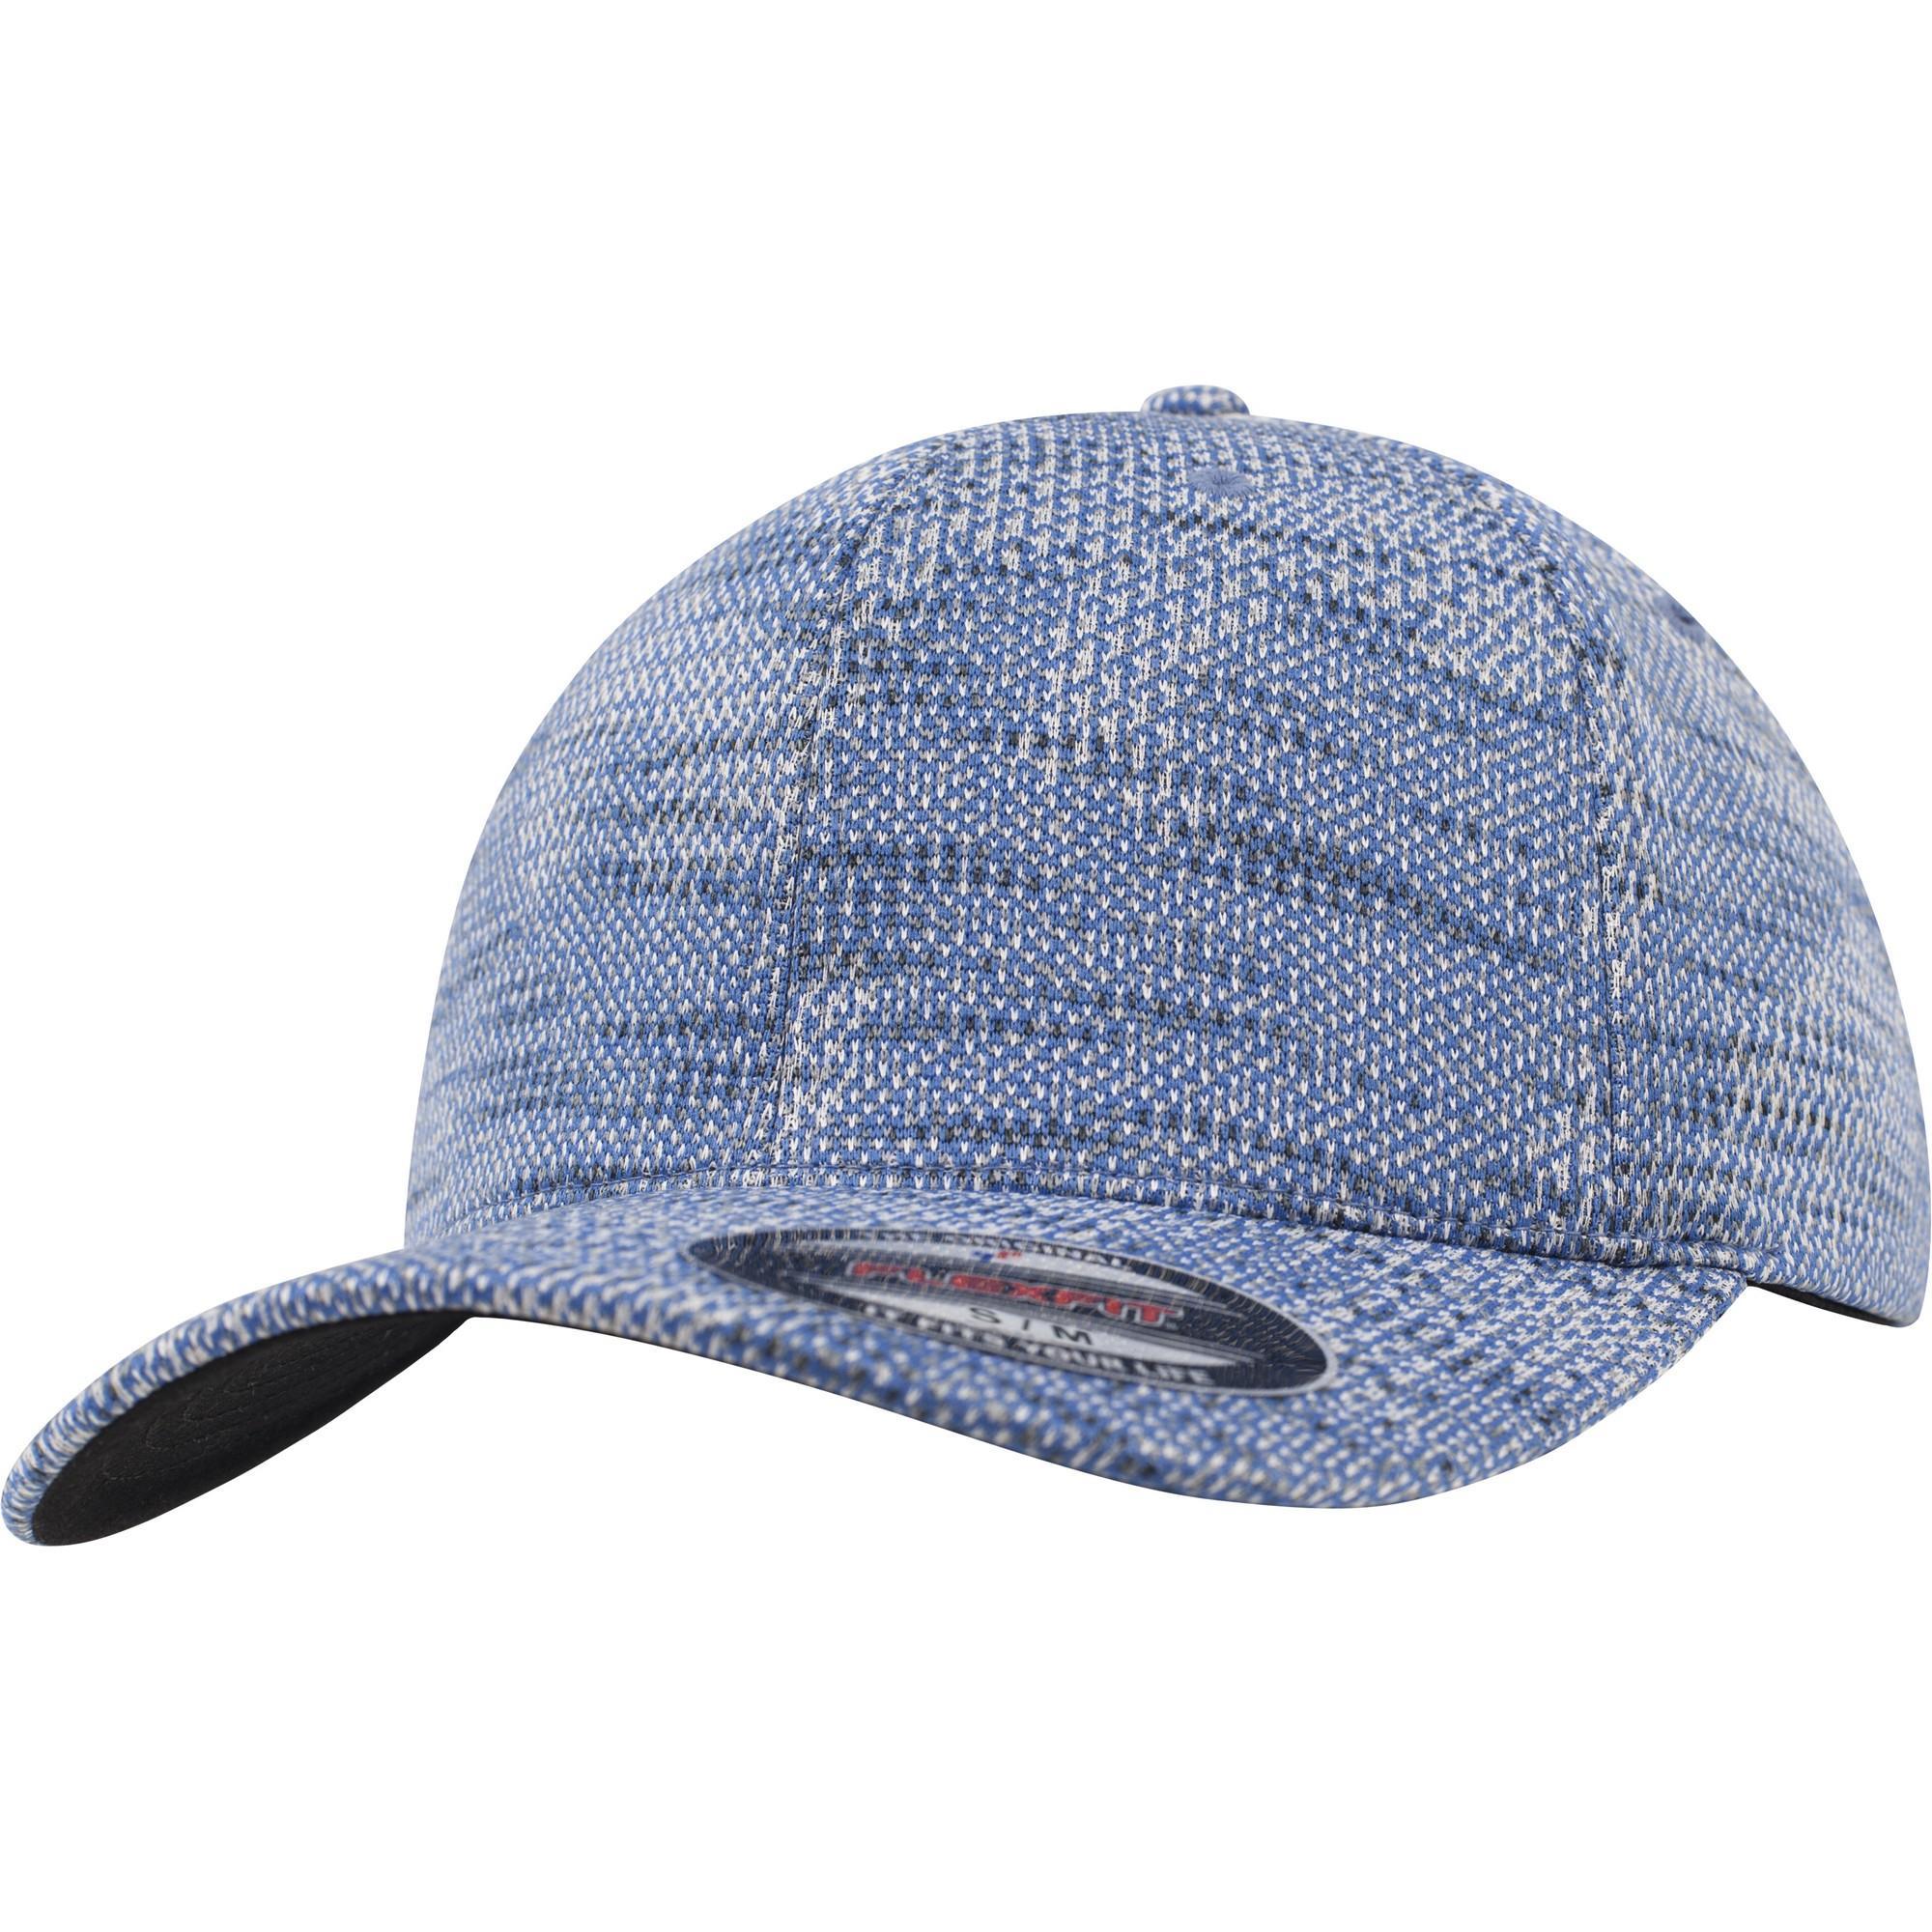 Flexfit by Yupoong Jacquard Knit Cap (Blue) (L/XL)